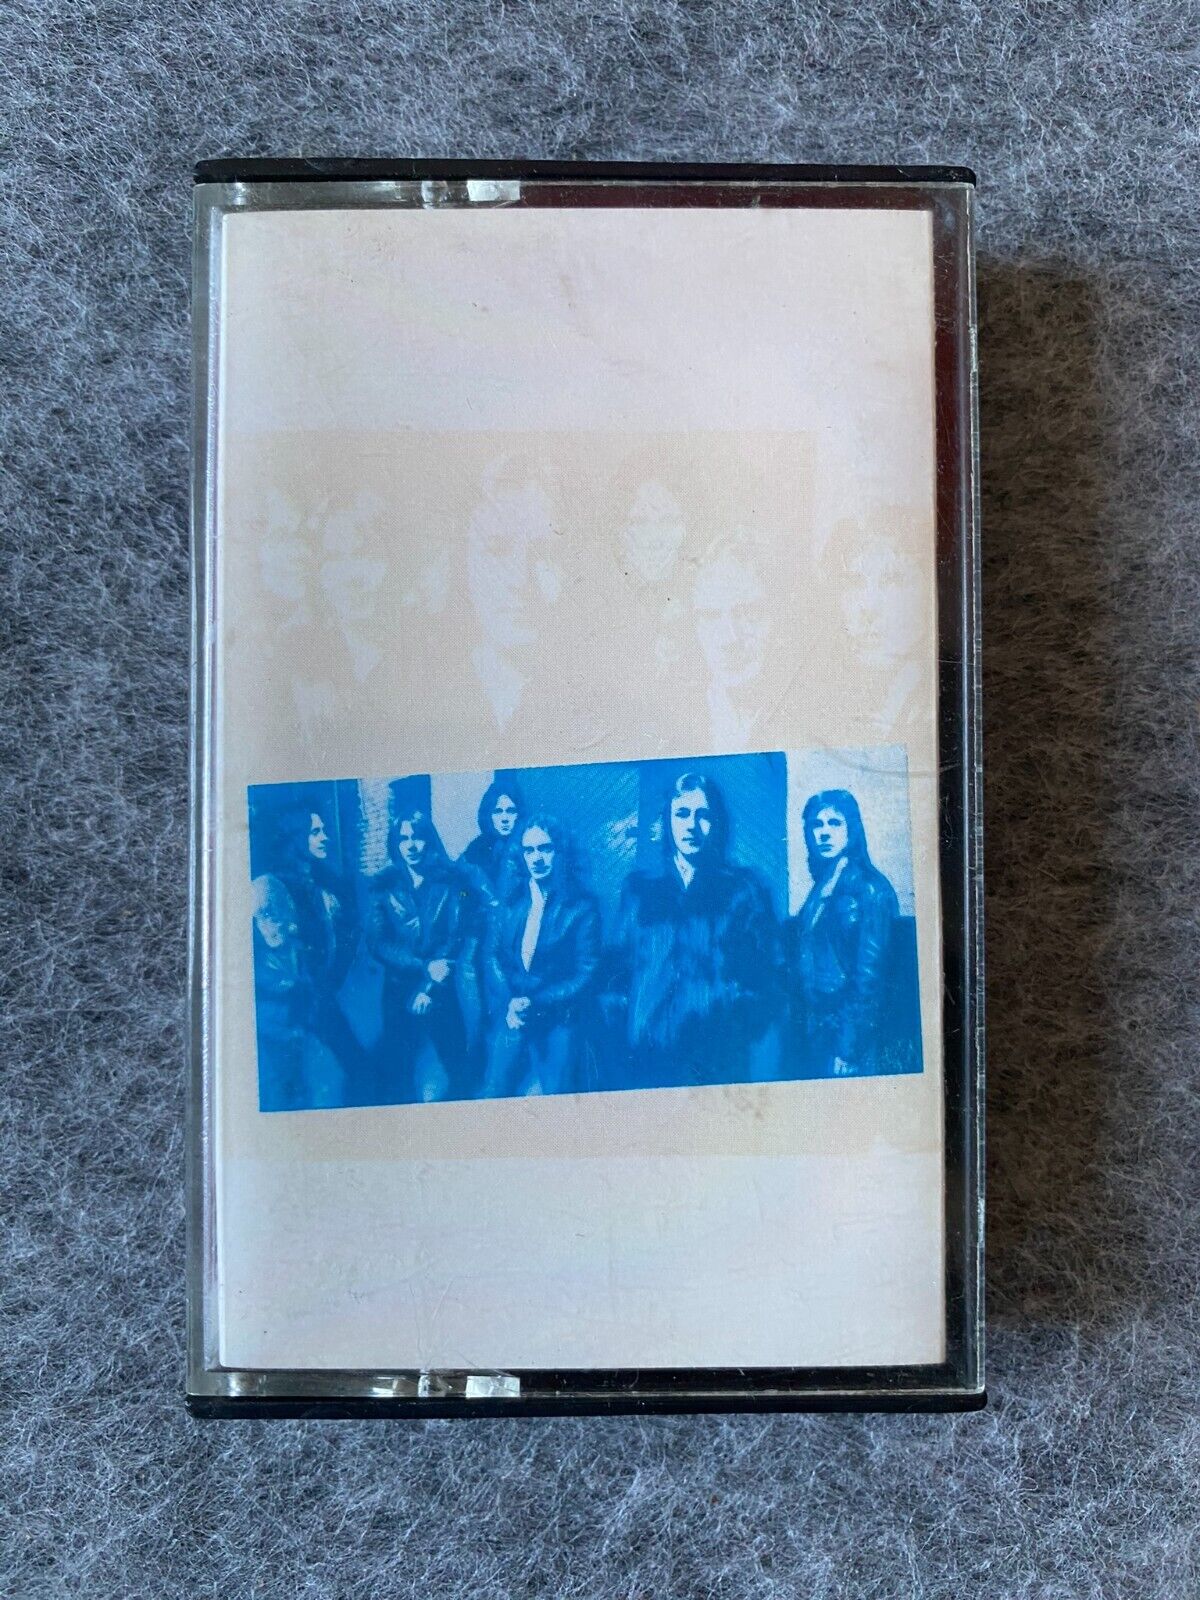 Foreigner Double Vision Cassette Tape 1978 Vintage